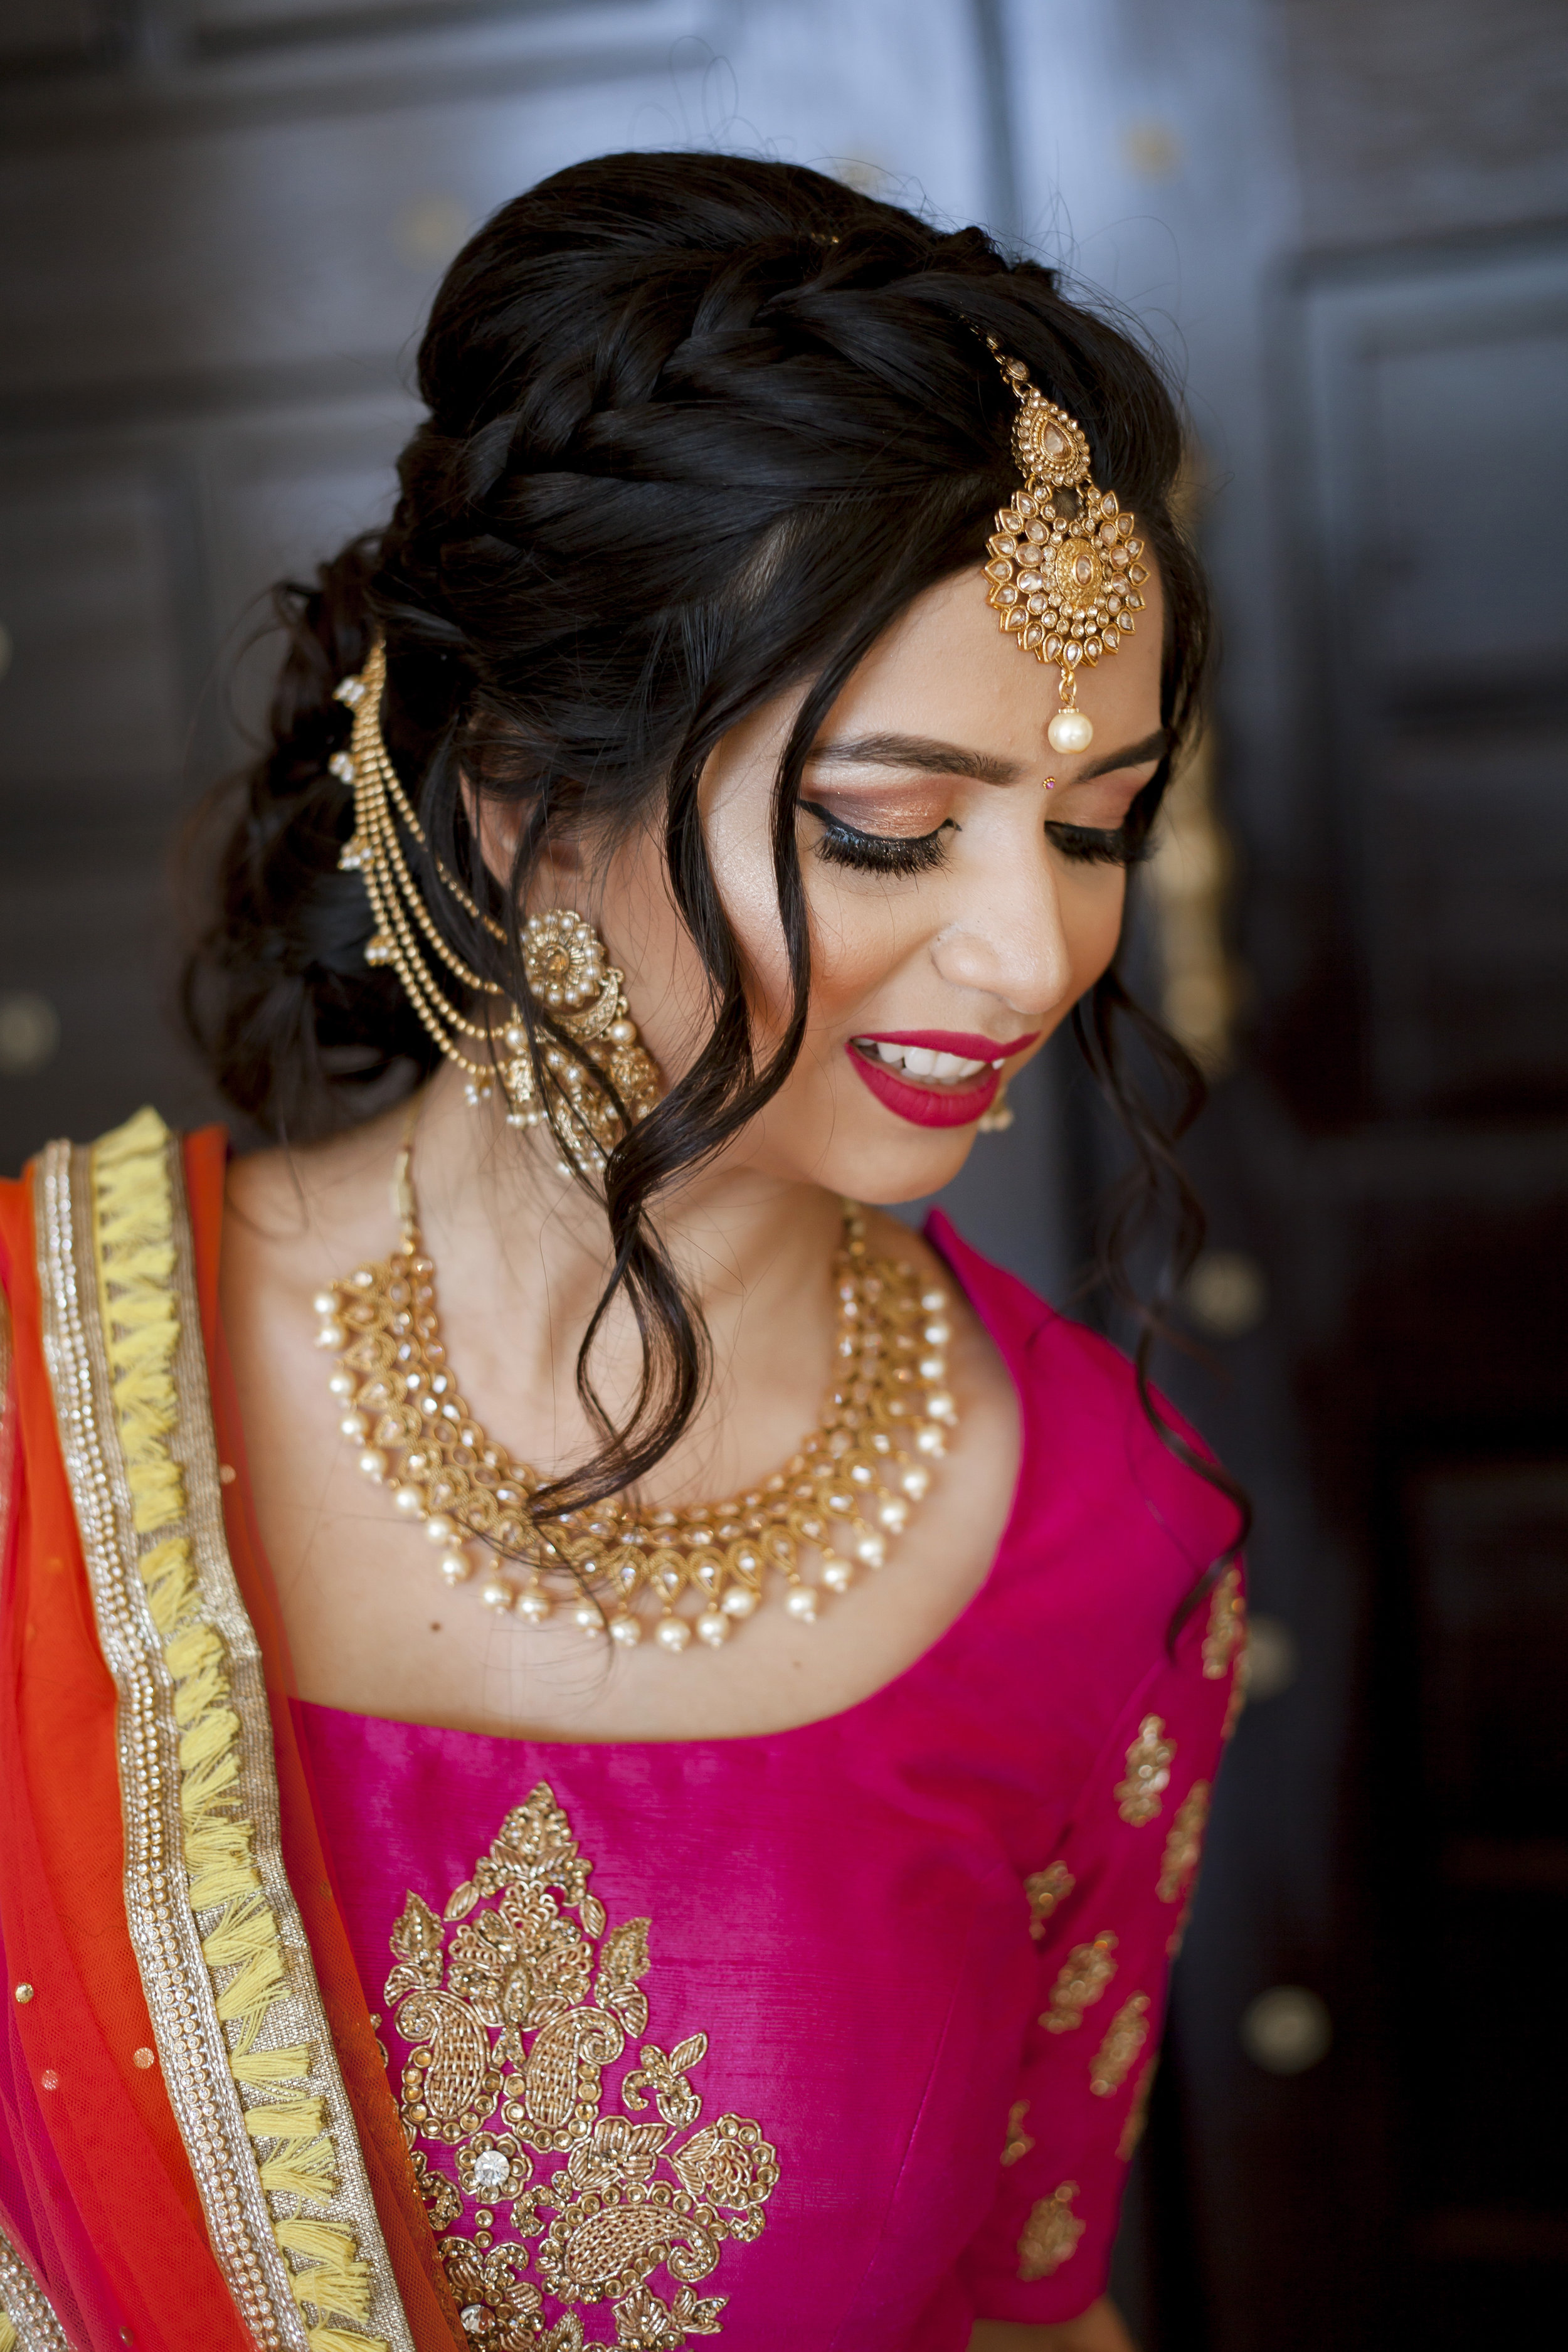 Jain Wedding - Pre & Post Wedding Rituals, Customs, Dress